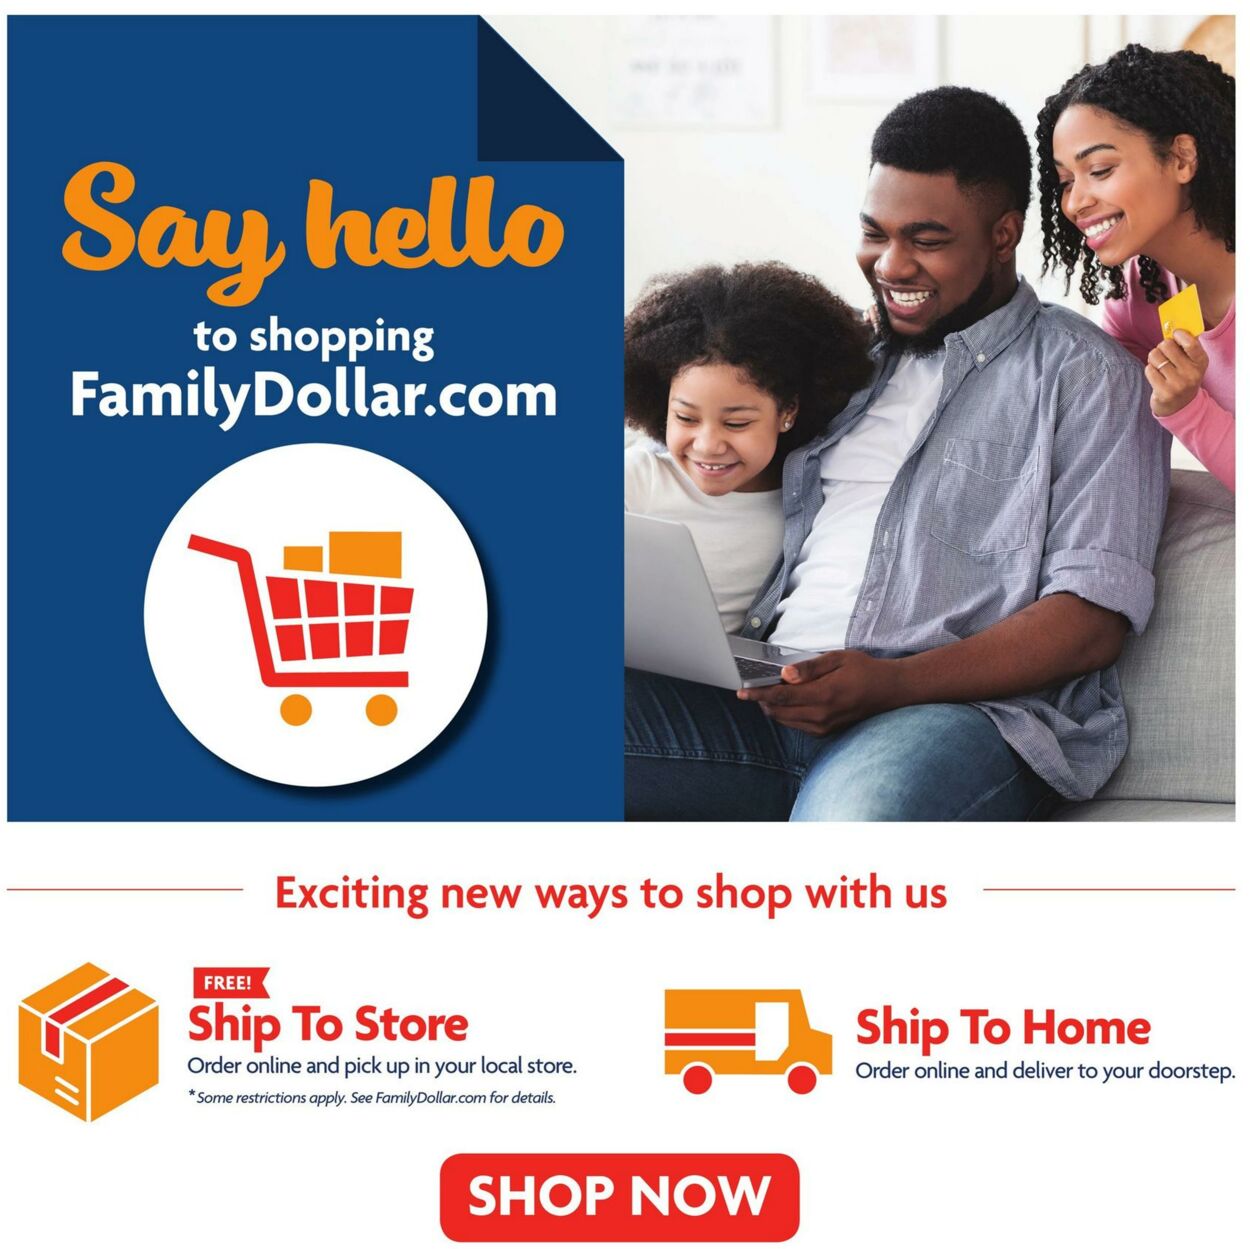 Weekly ad Family Dollar 09/25/2022 - 10/01/2022